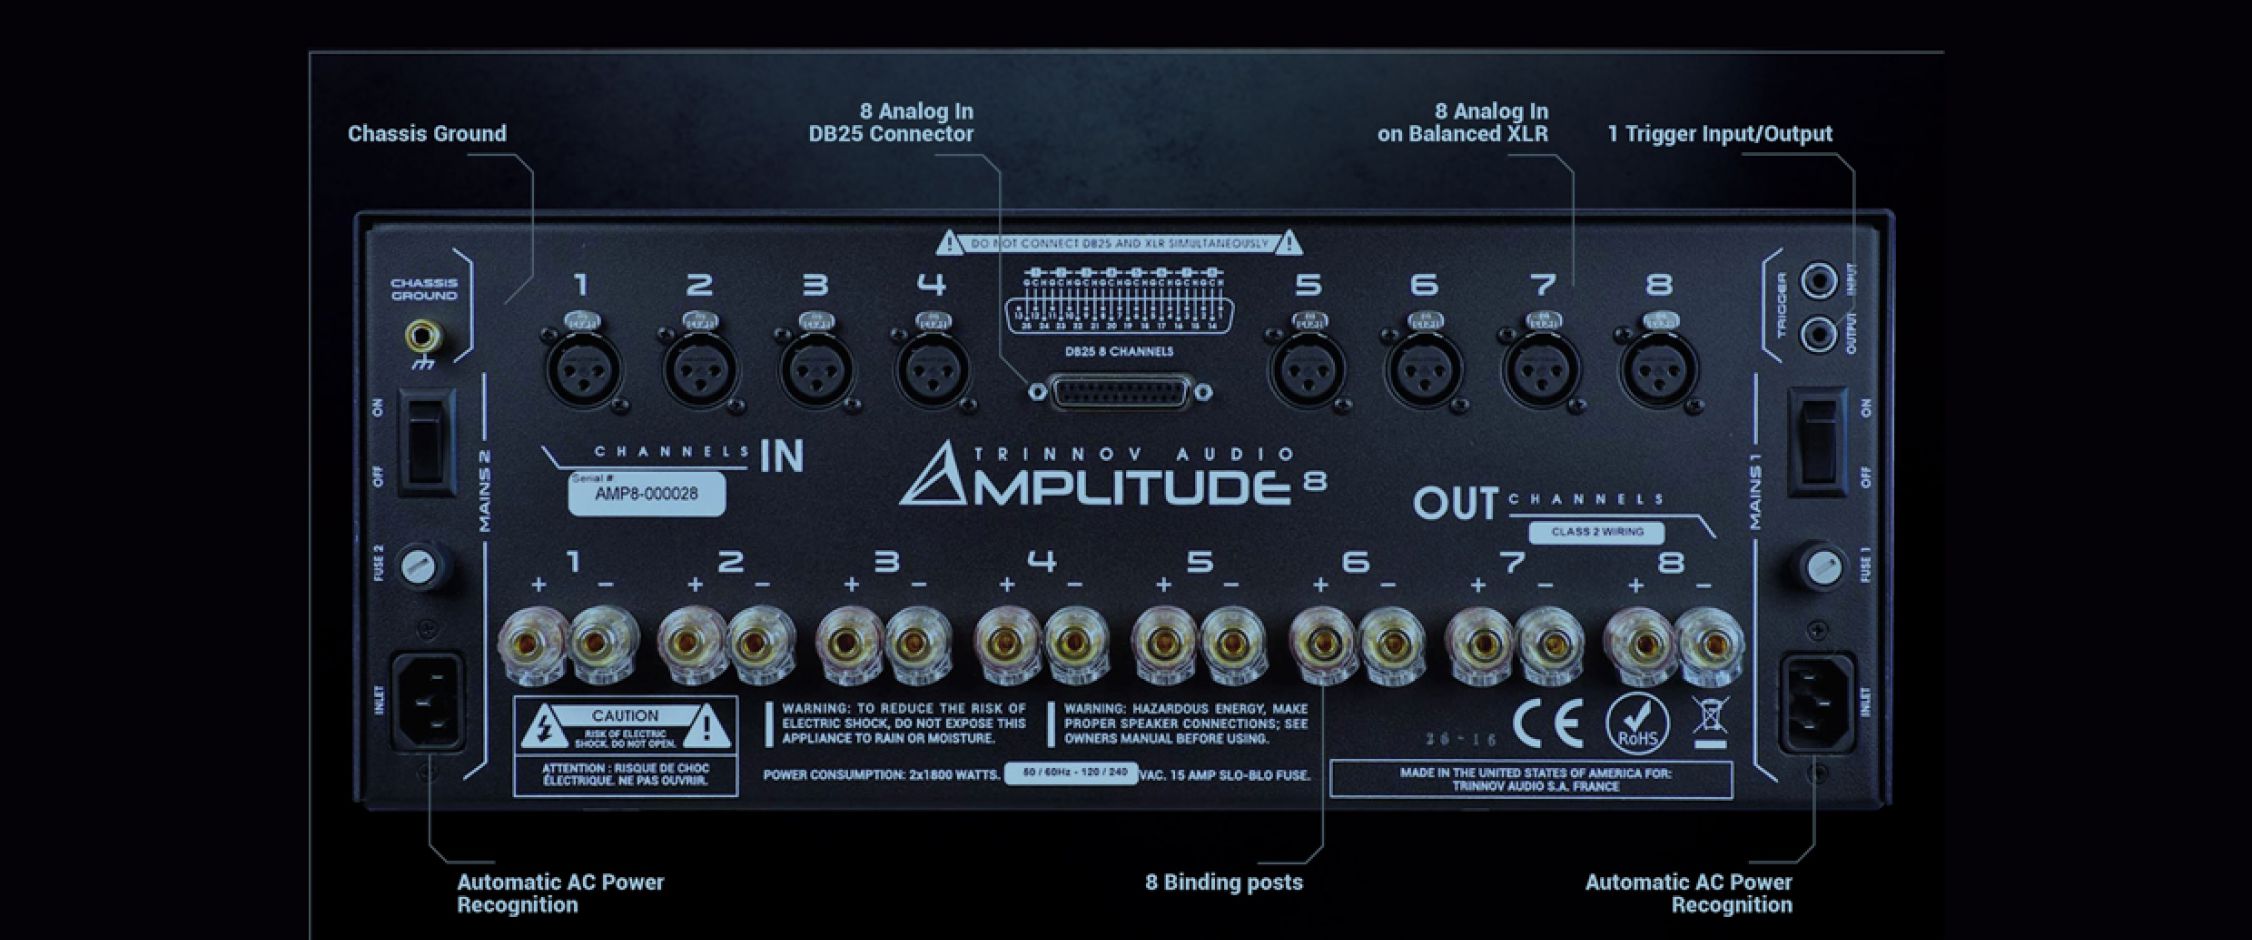 amplitude 8_back